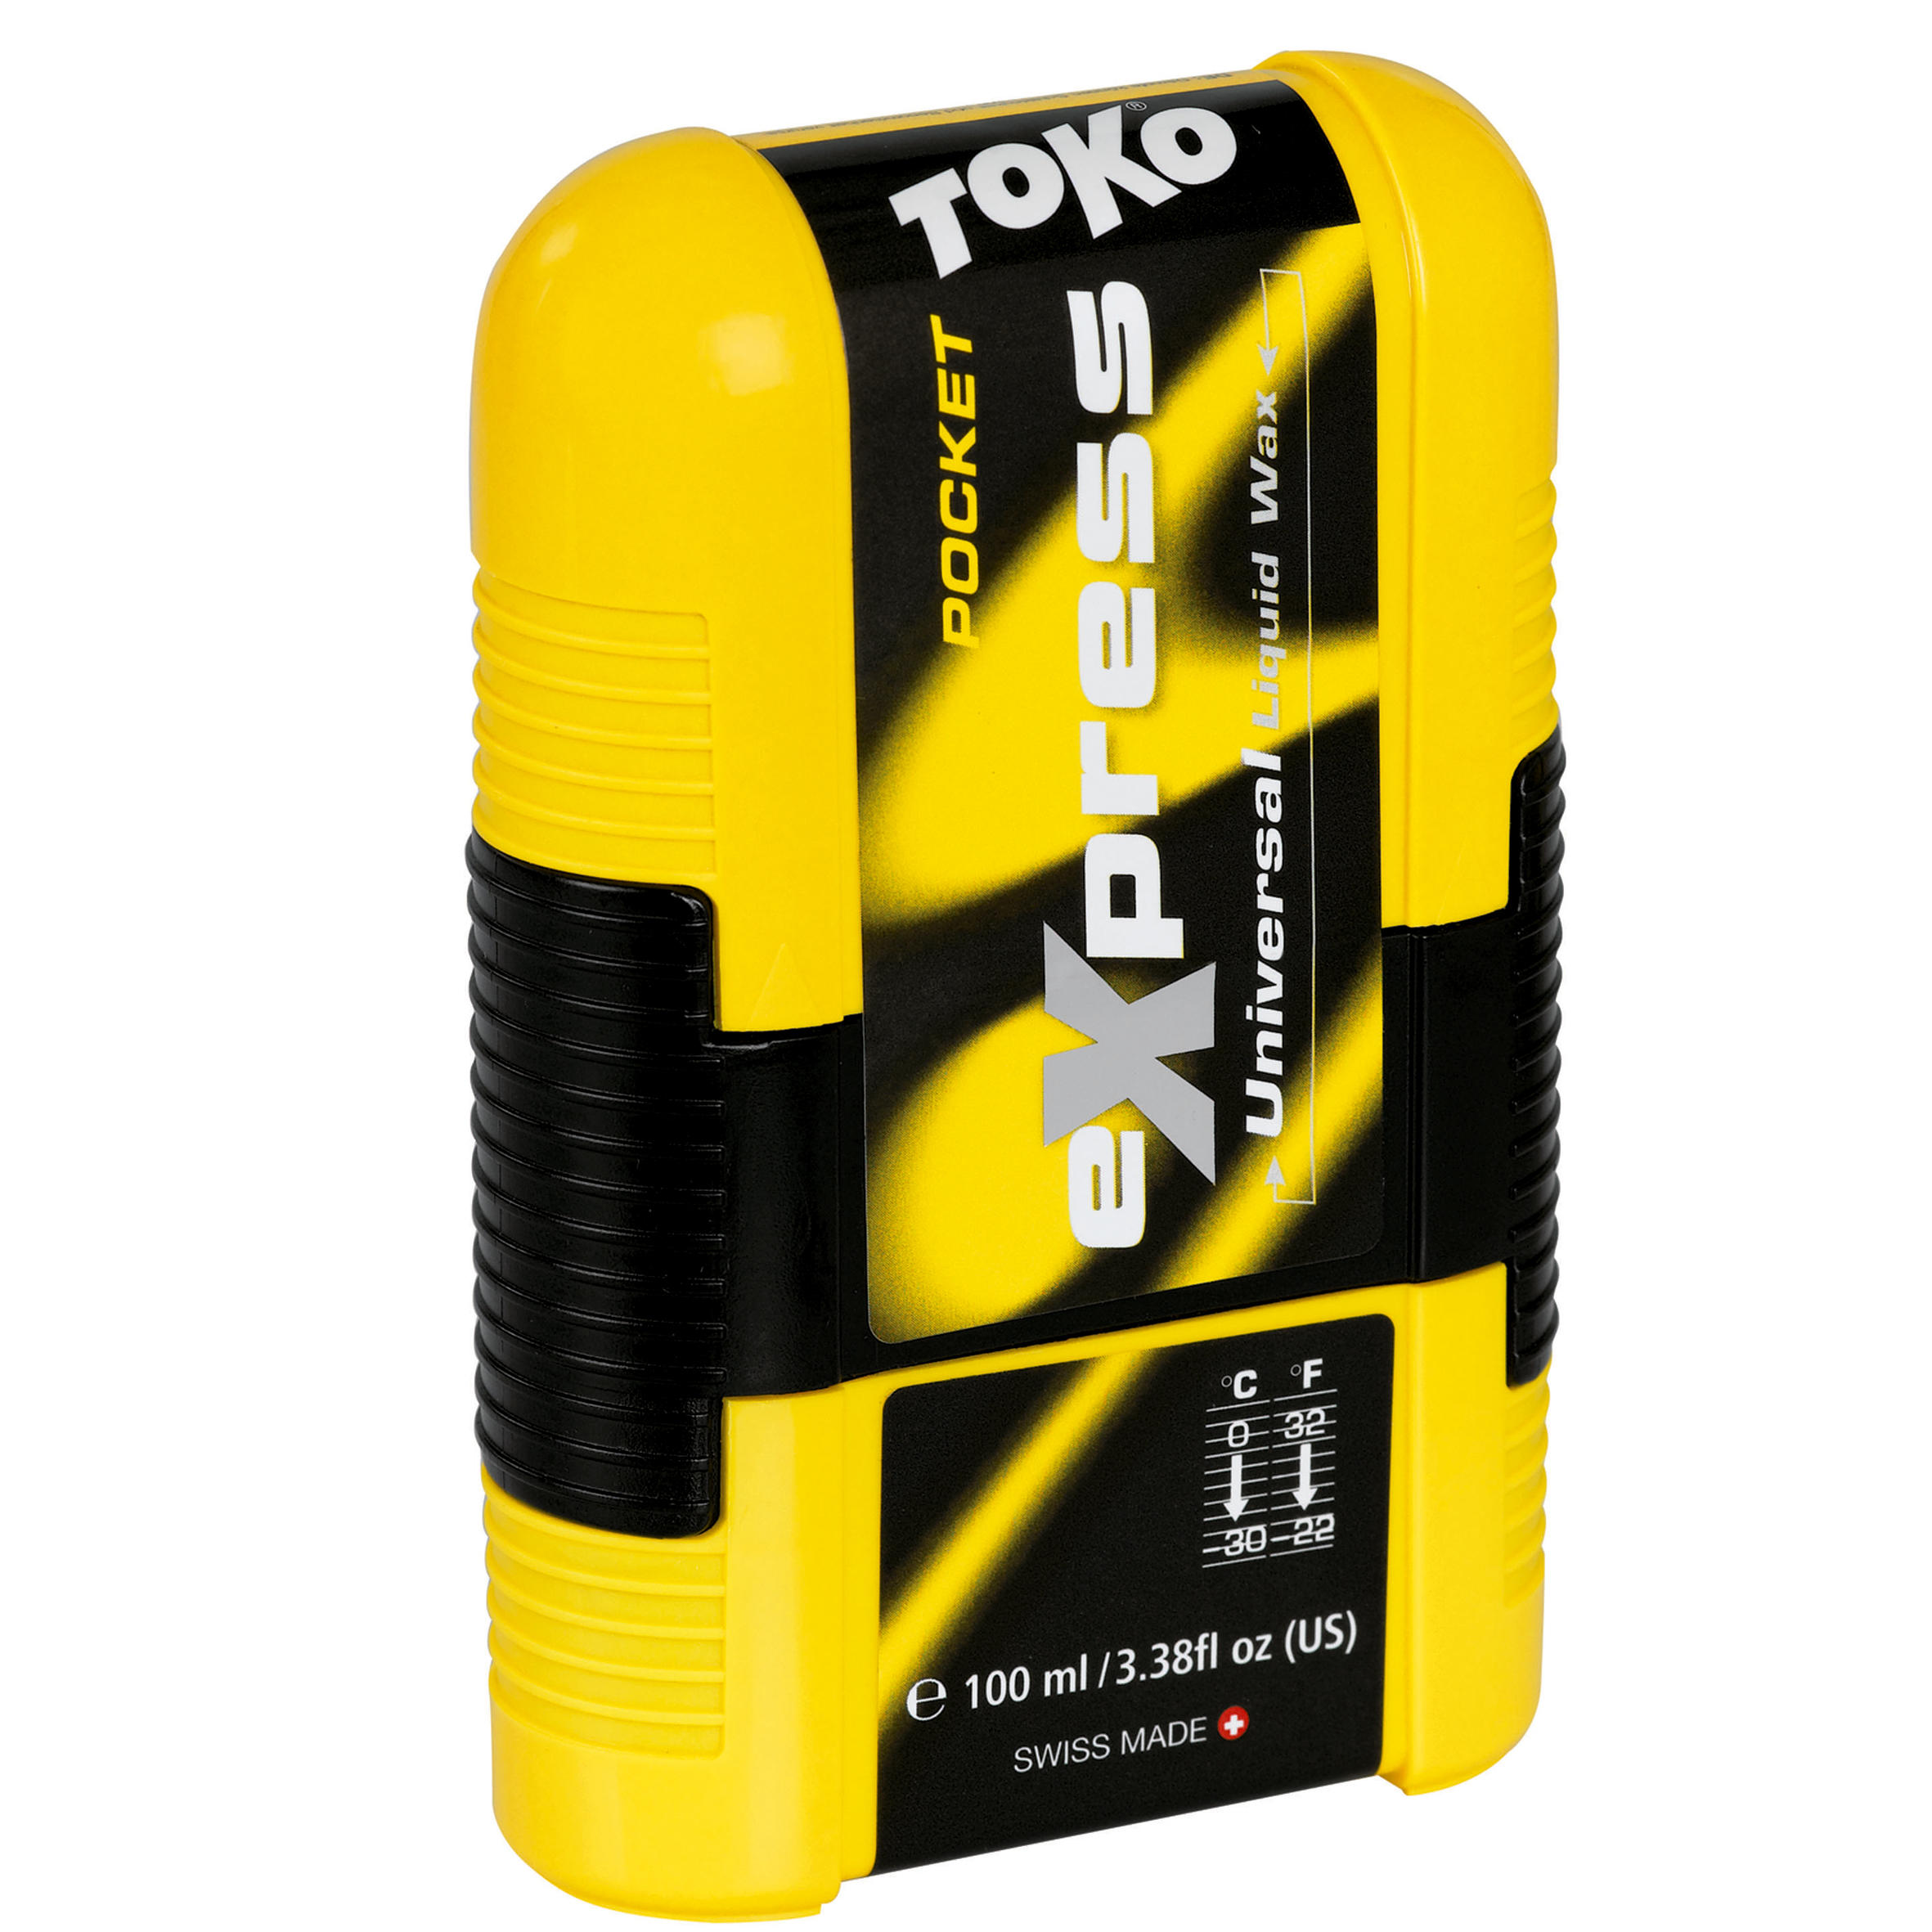 TOKO Ski Snowboard or Cross-Country Ski Skin Wax Express Pocket 100 ml.